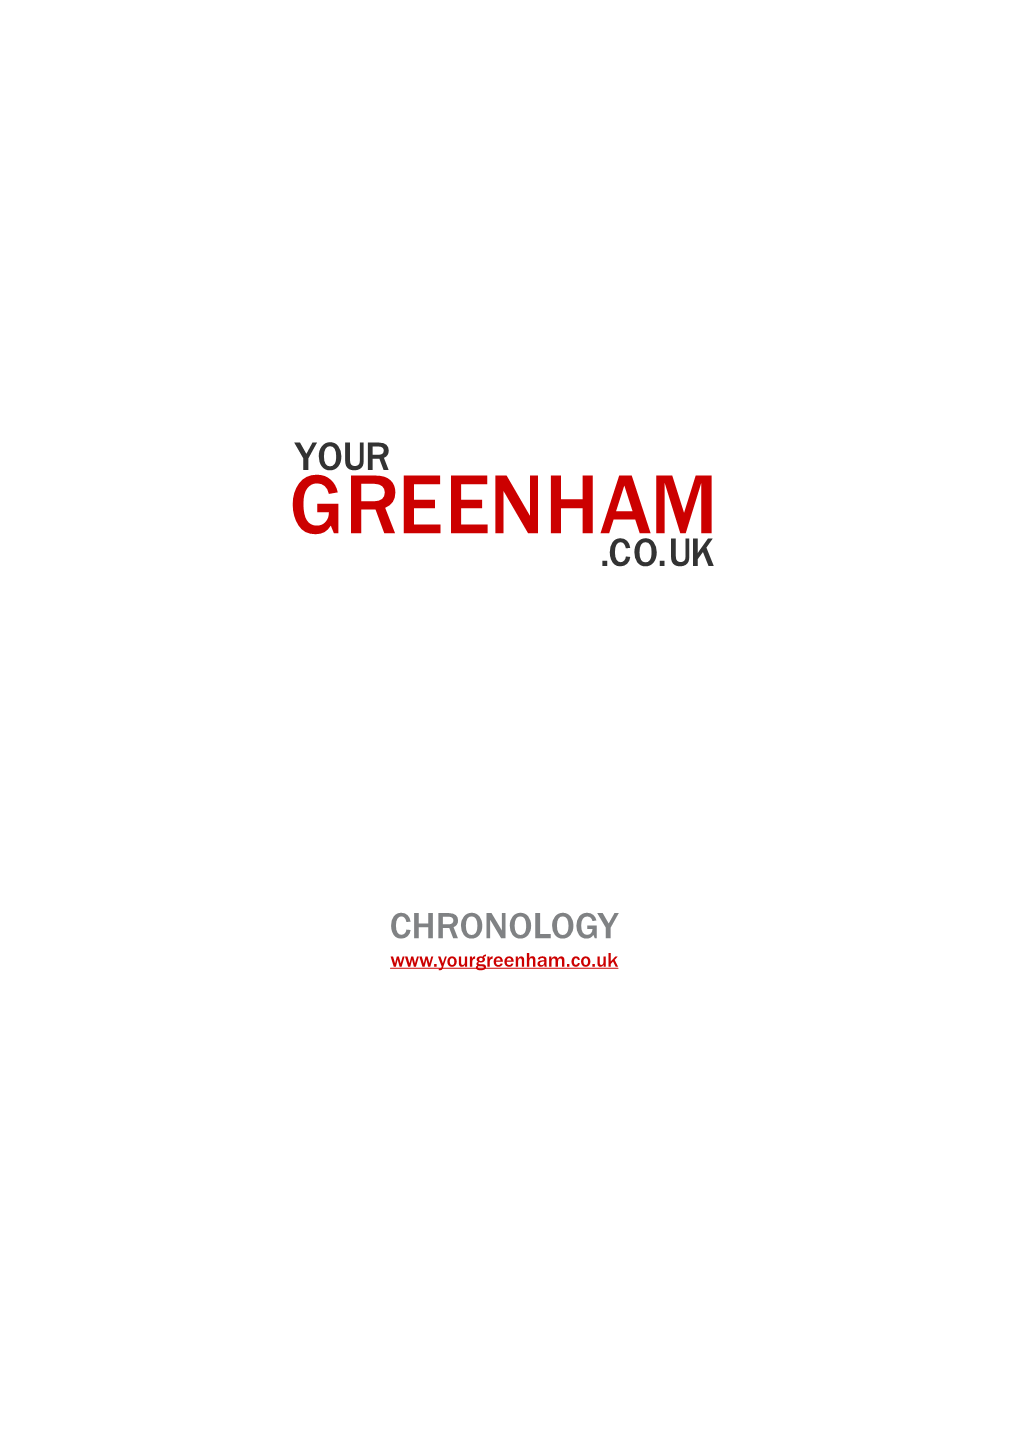 Greenham Common Chronology